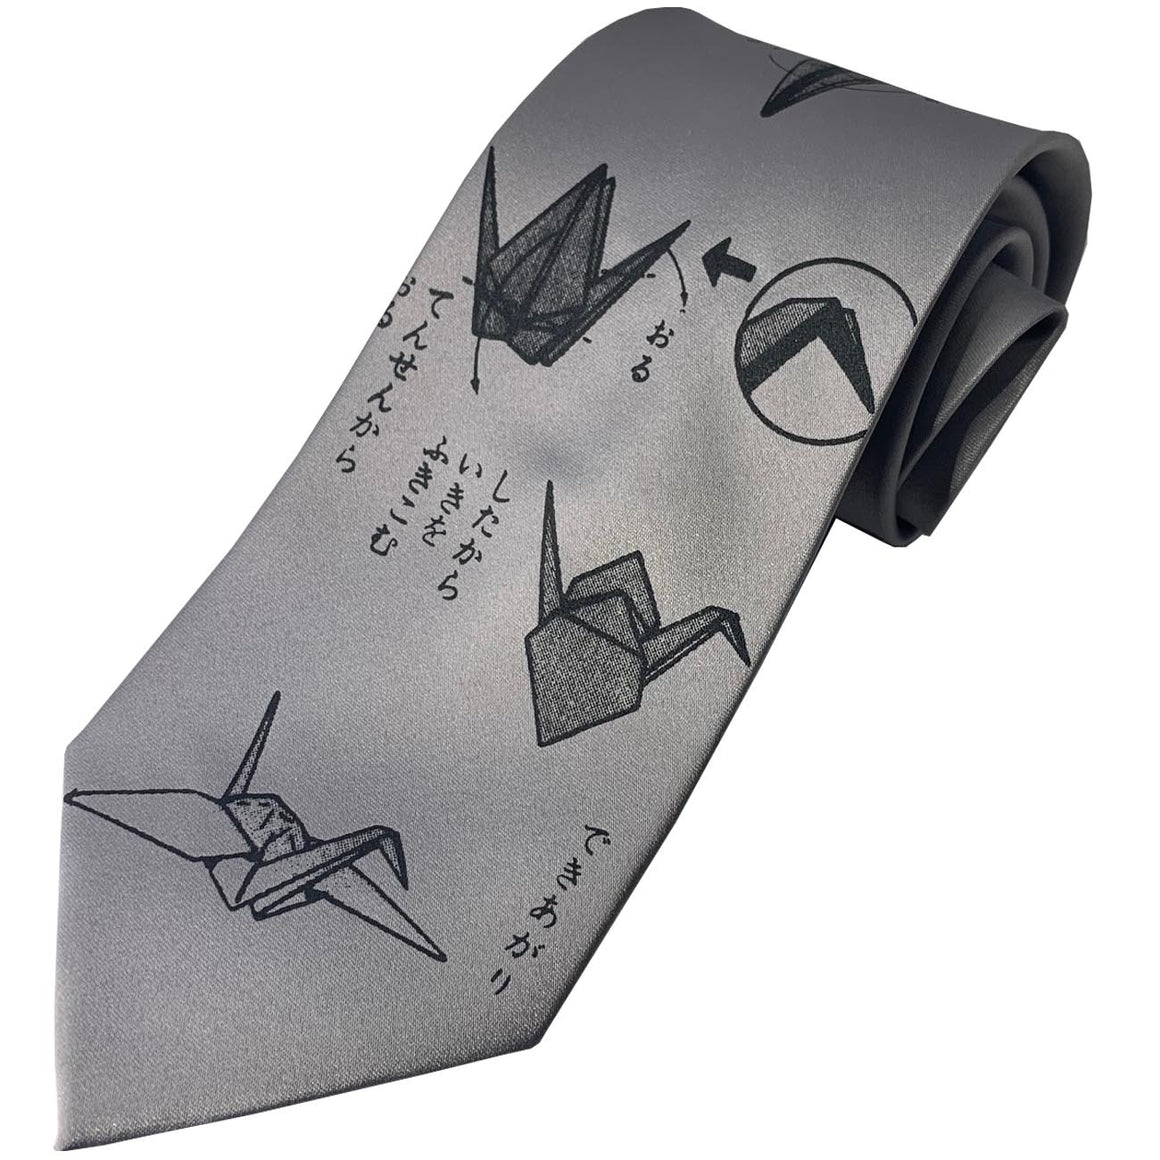 Necktie- Origami dark grey on silver microfiber